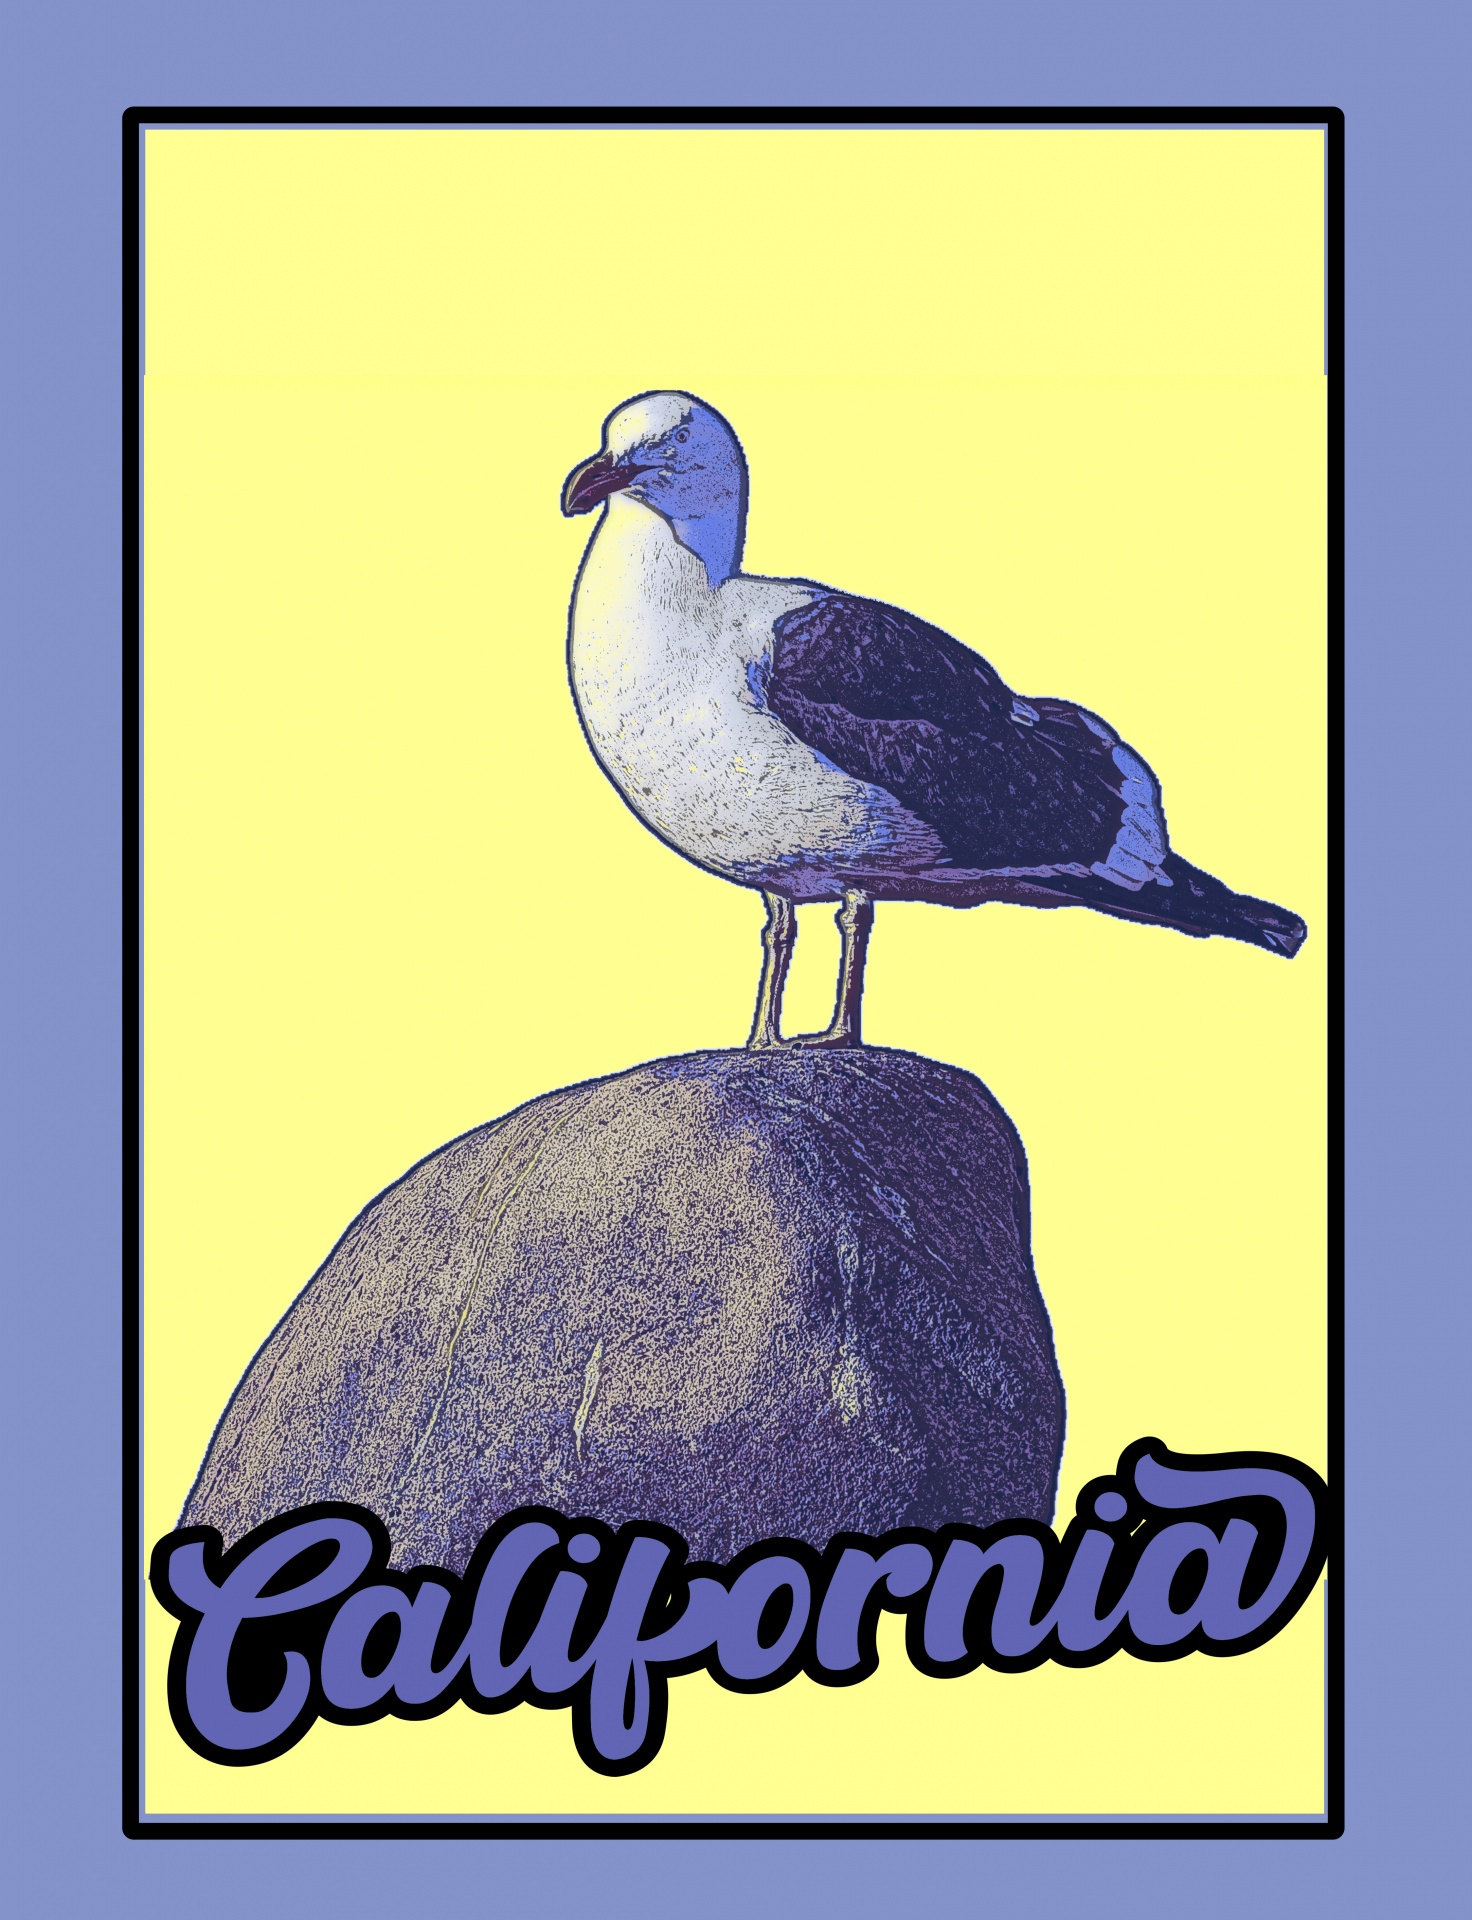 California Travel Poster Seagull